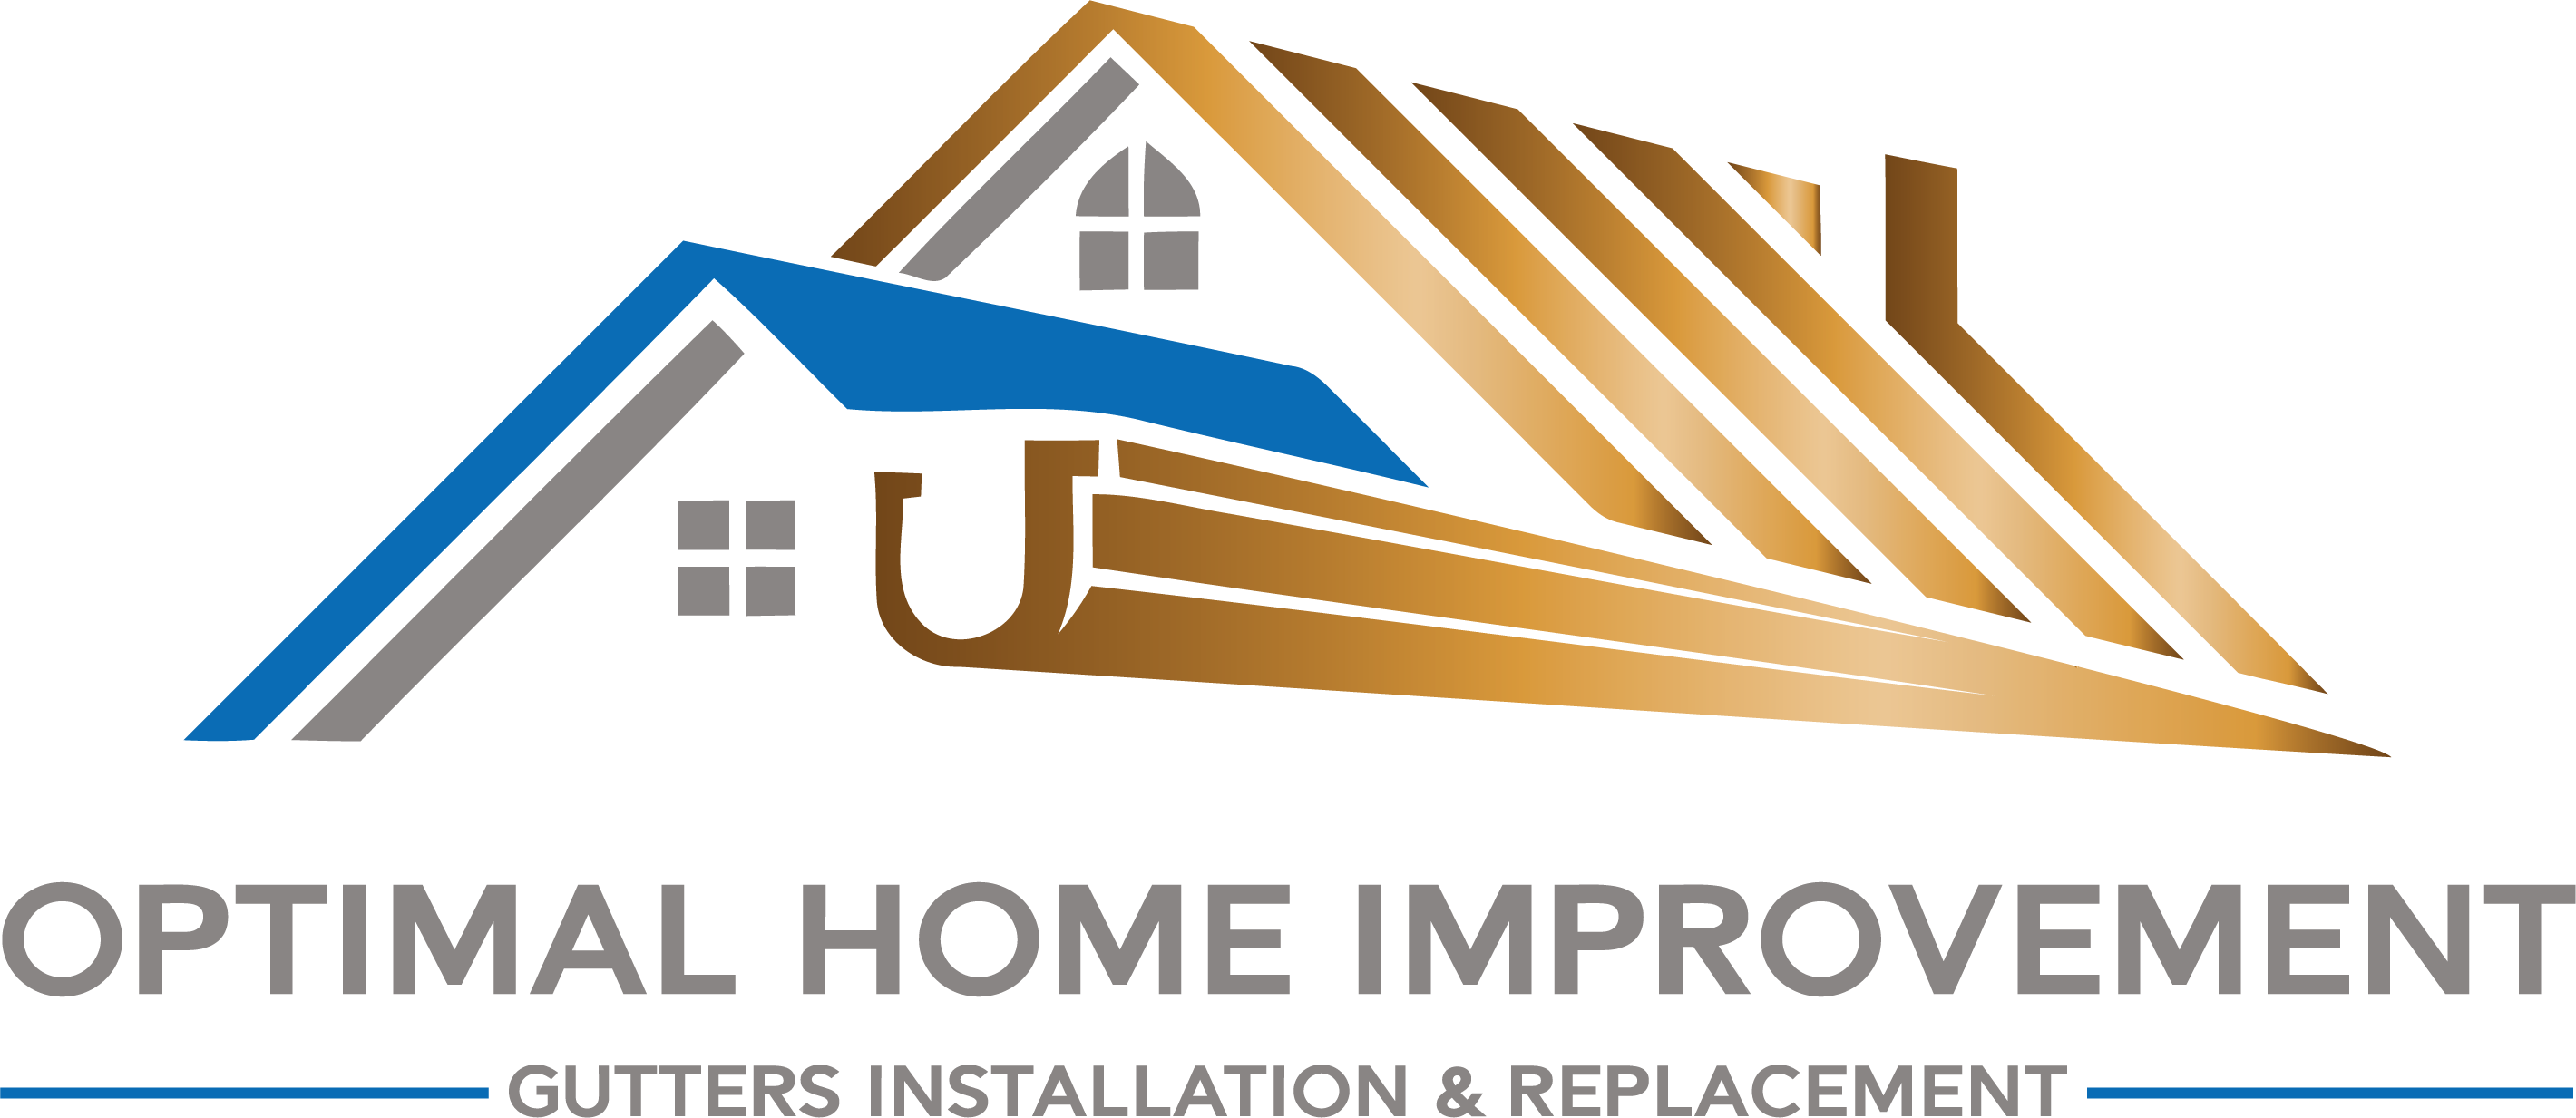 logo of optimal home improvement inc company